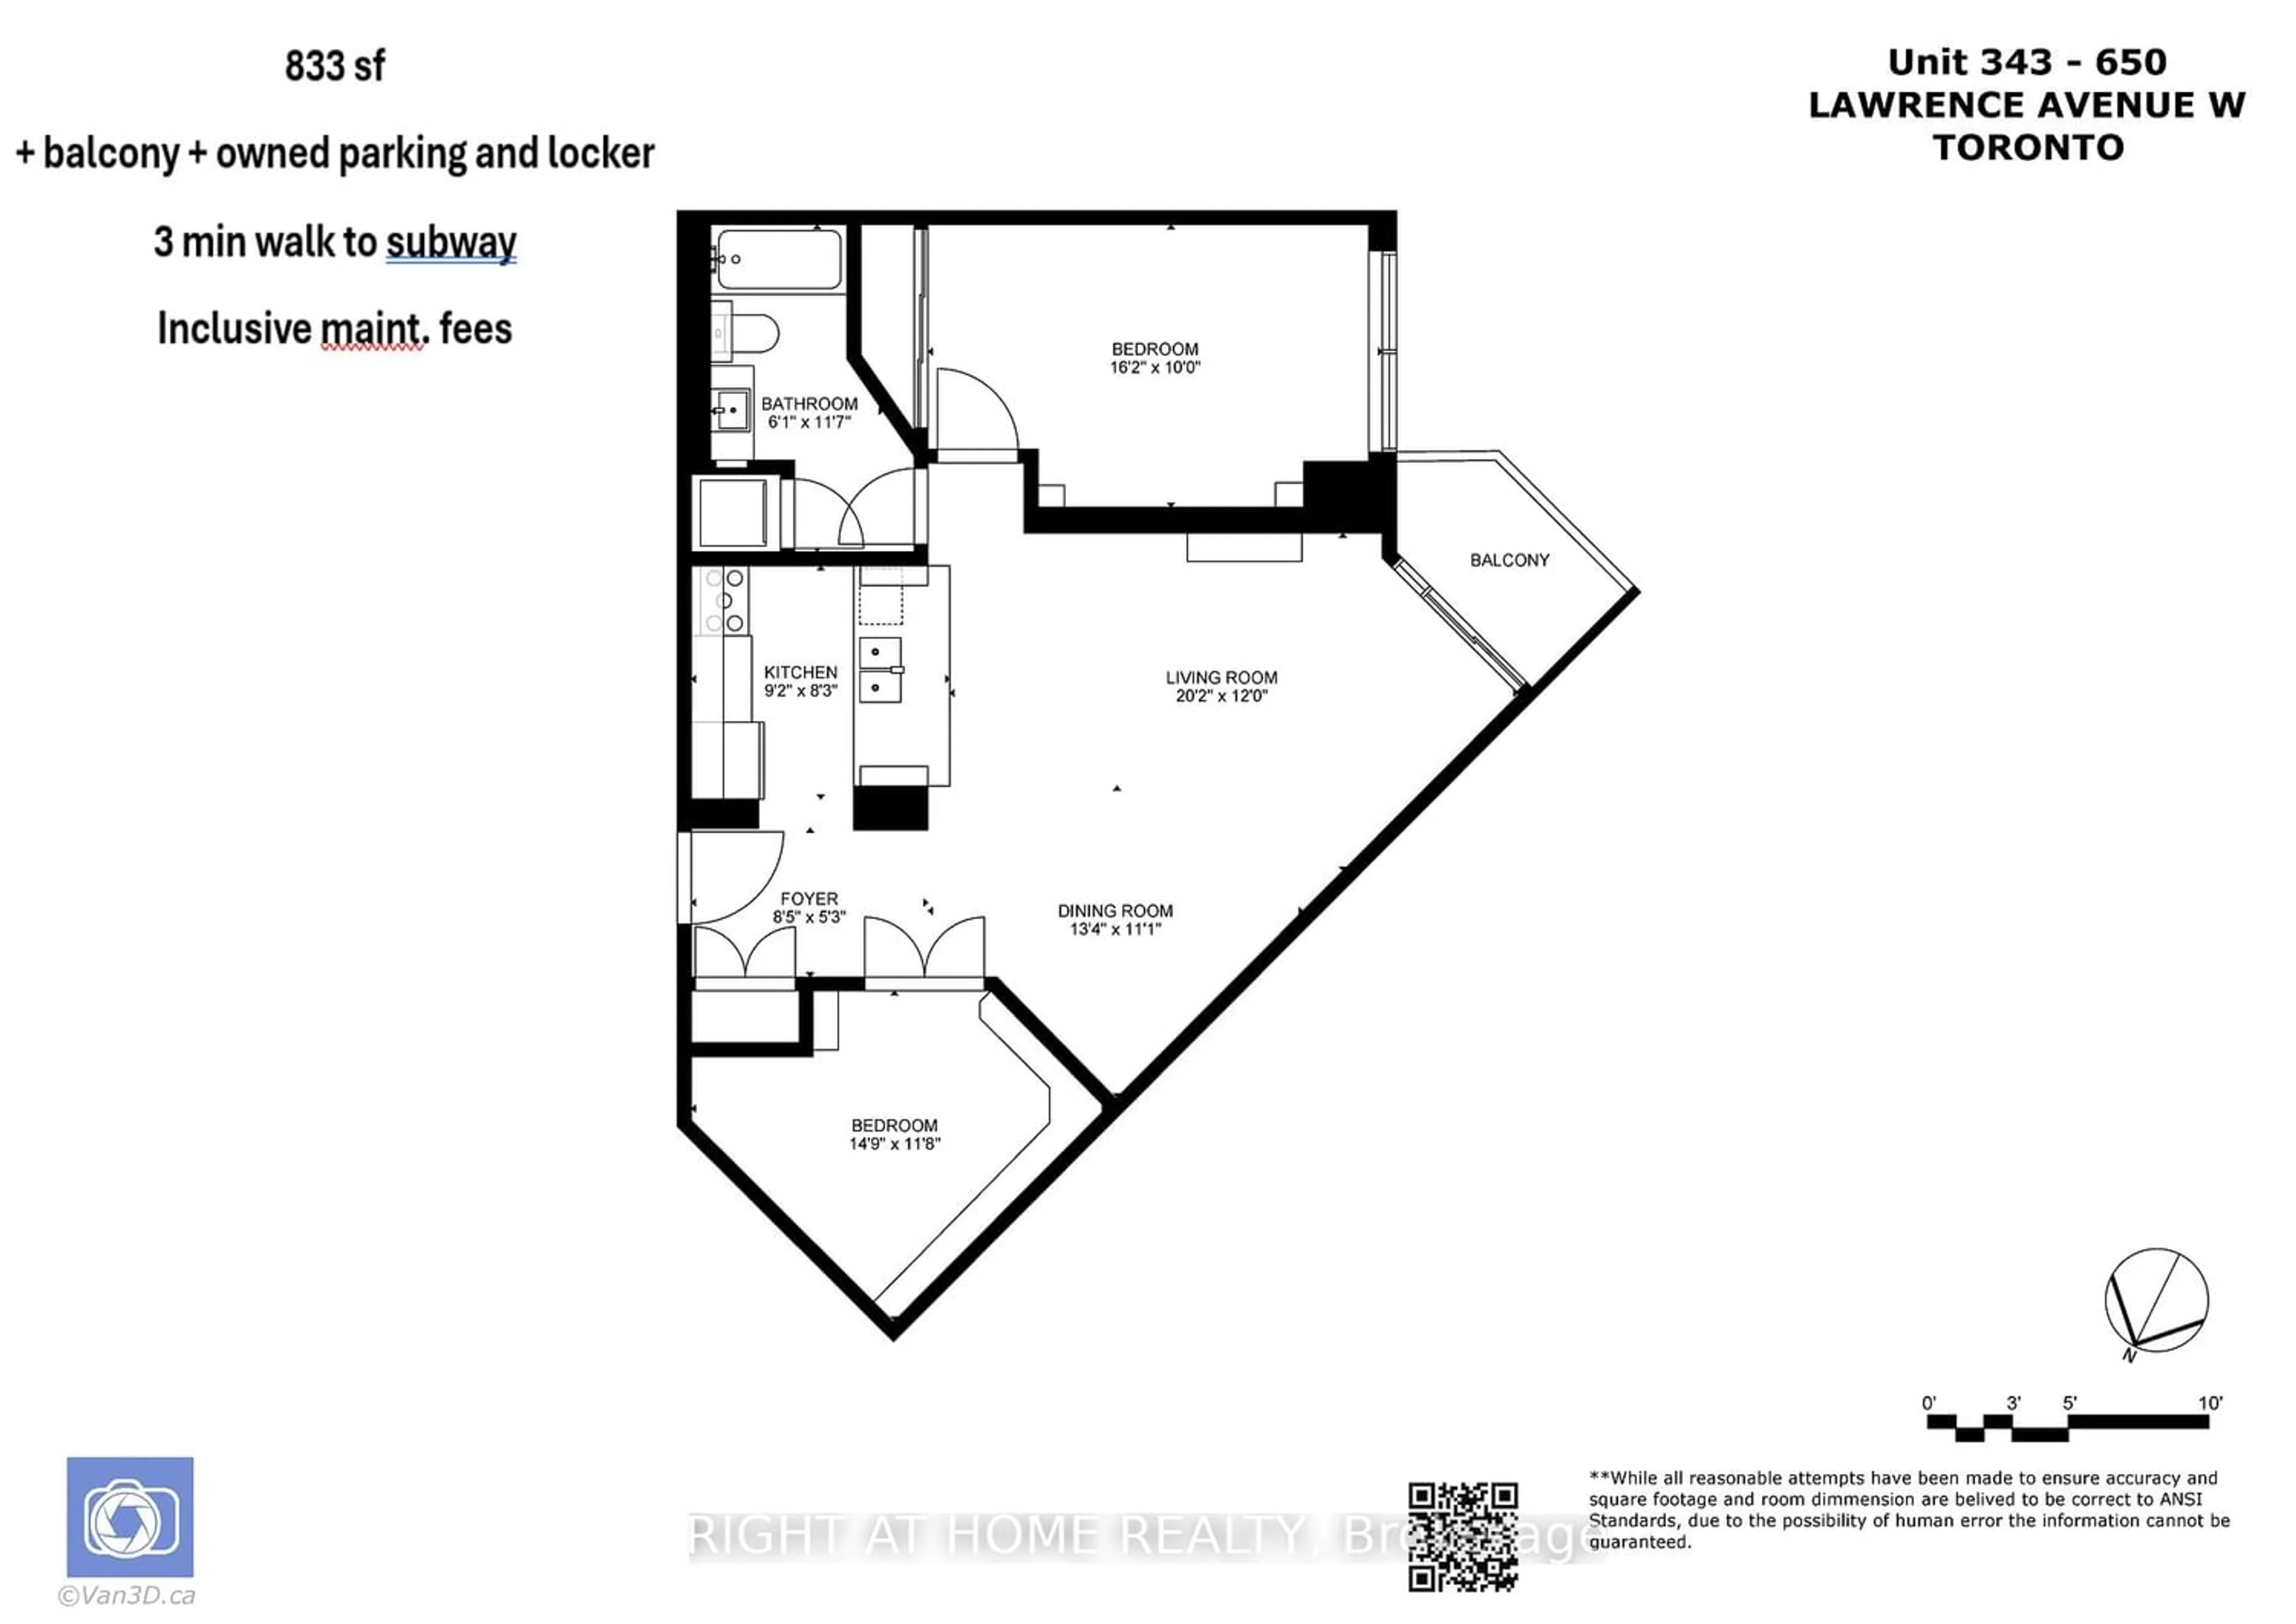 Floor plan for 650 Lawrence Ave #343, Toronto Ontario M6A 3E8